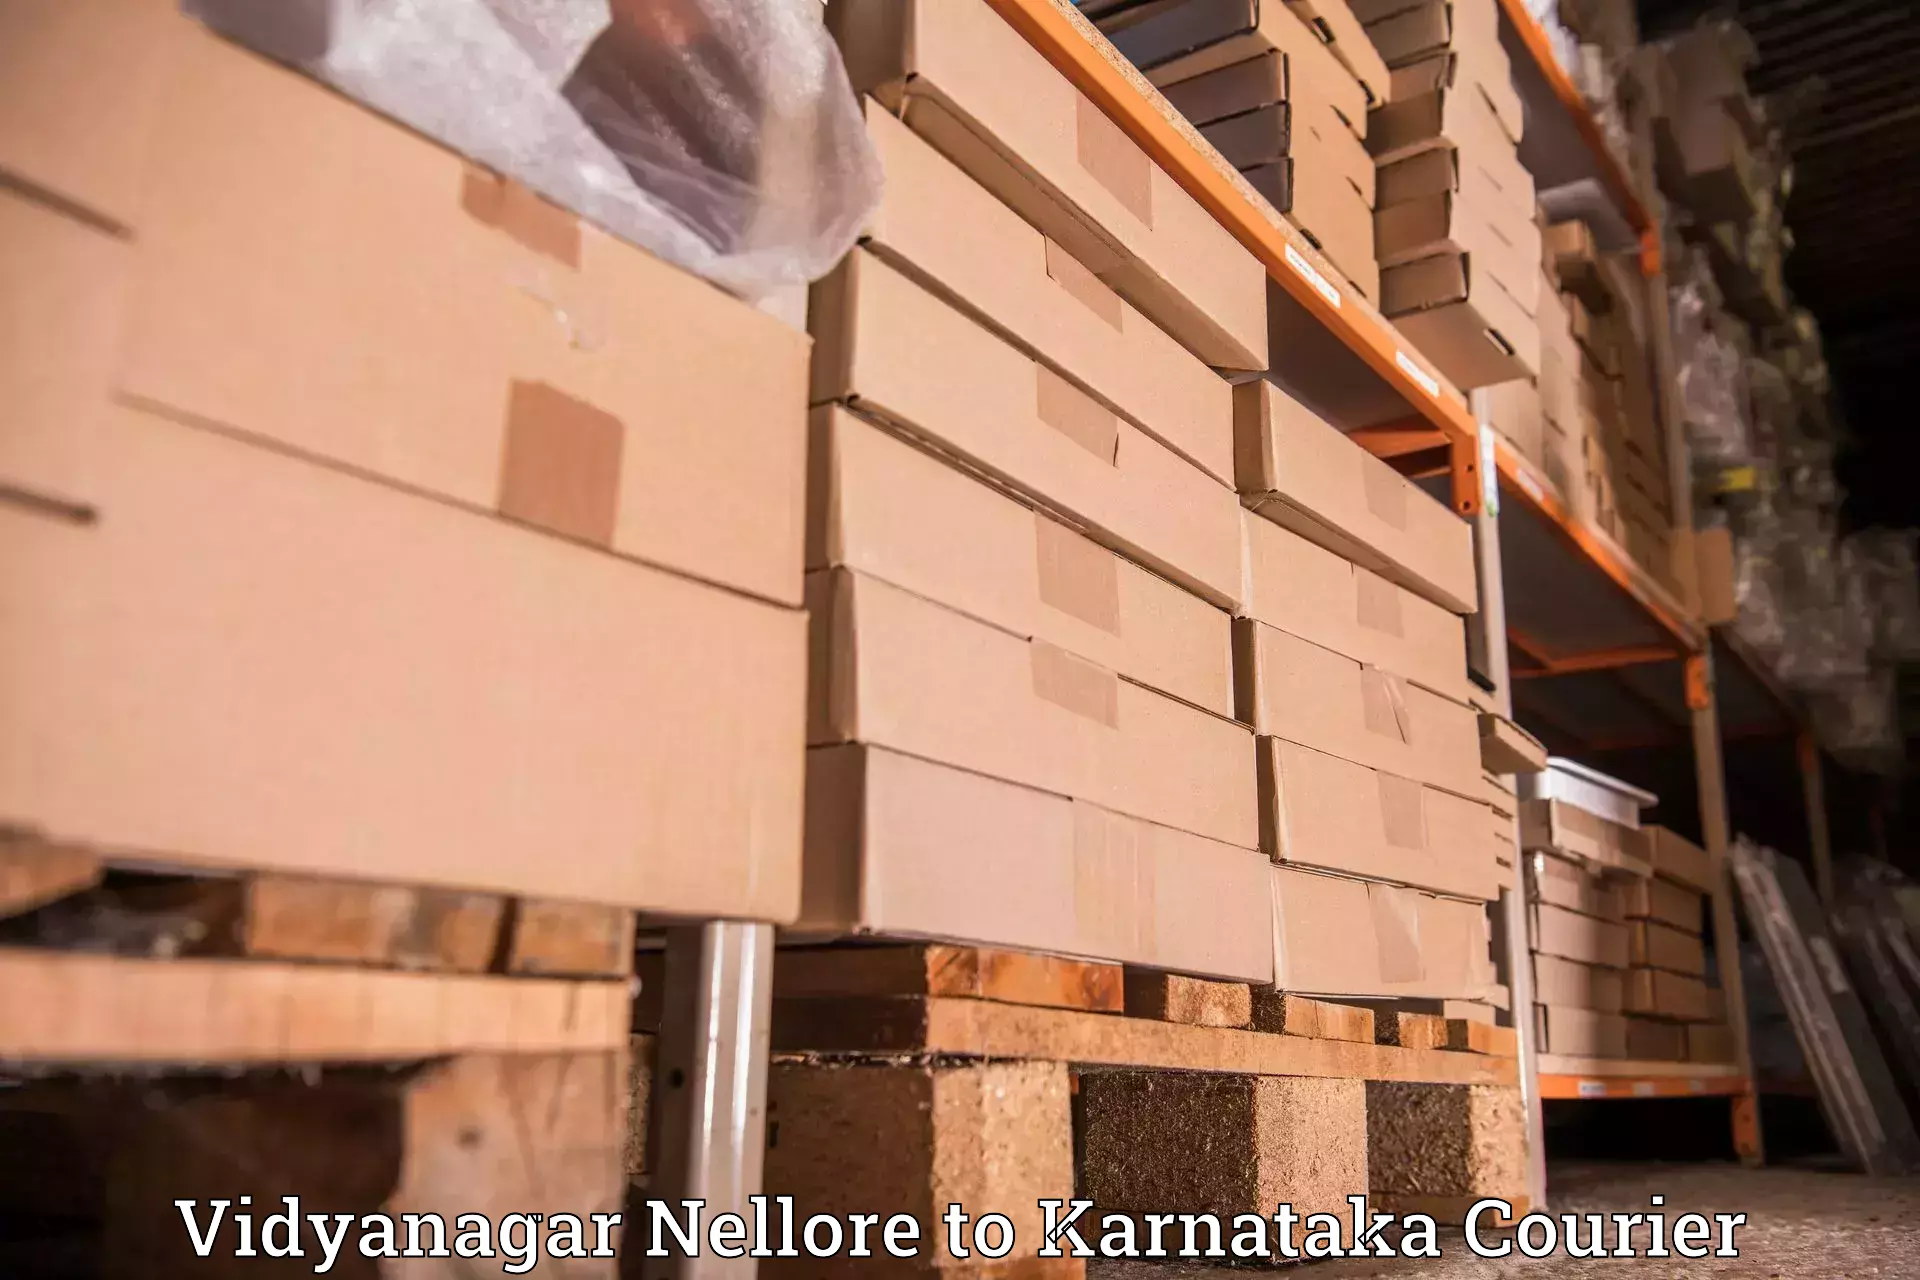 Courier service innovation Vidyanagar Nellore to Dandeli